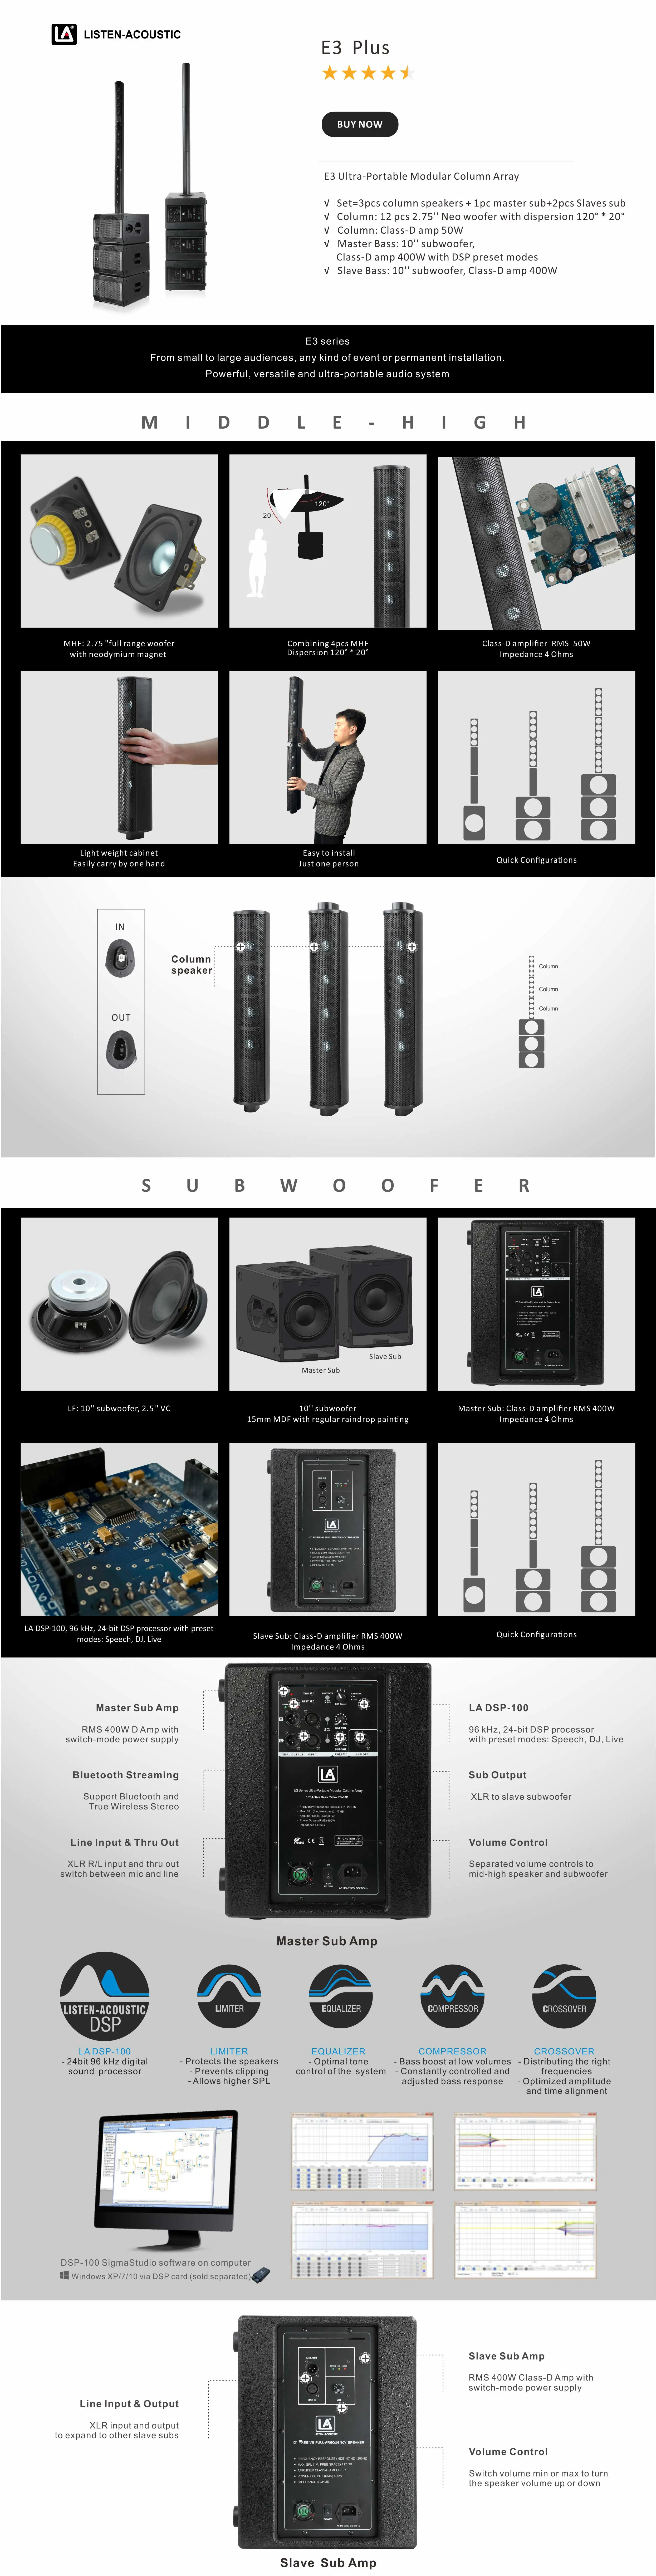 Portable Column Speakers, portable speakers with subwoofer, powered speakers, dj speakers